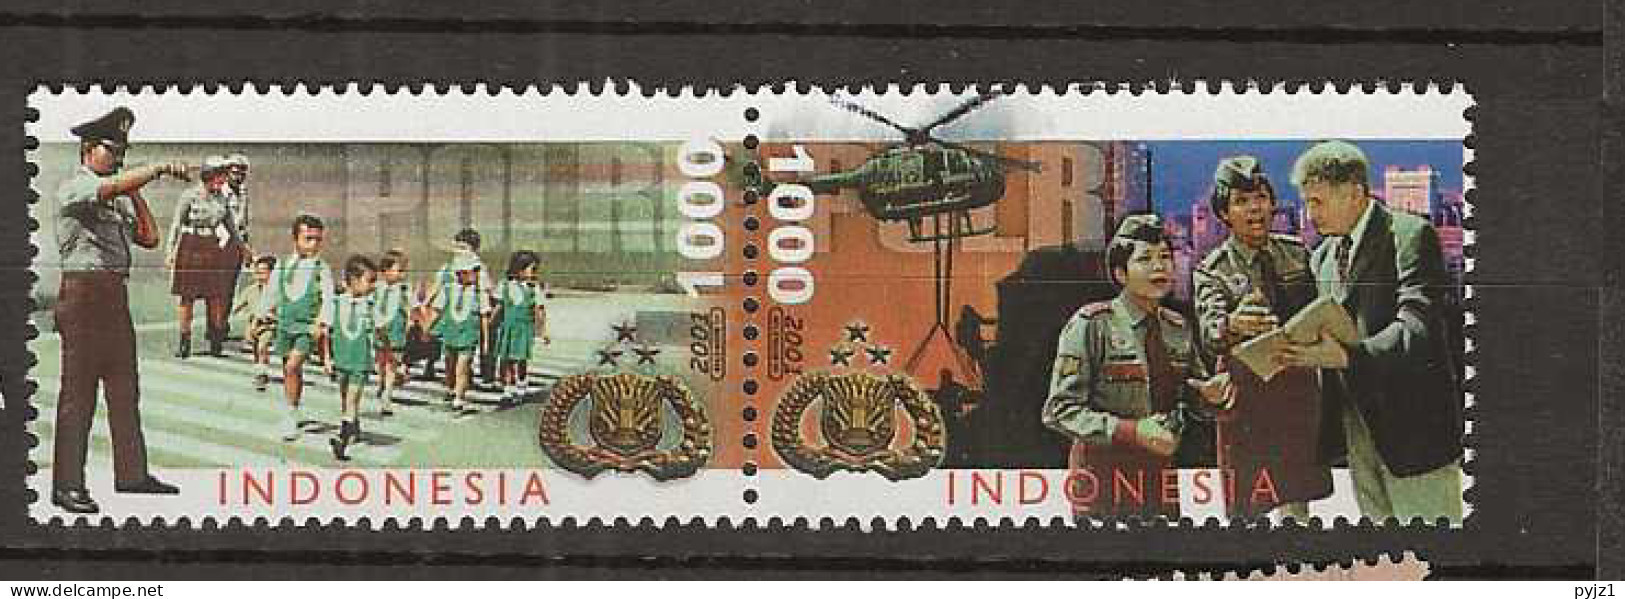 2001 MNH Indonesia ZBL 2195-96 Postfris** - Indonesien